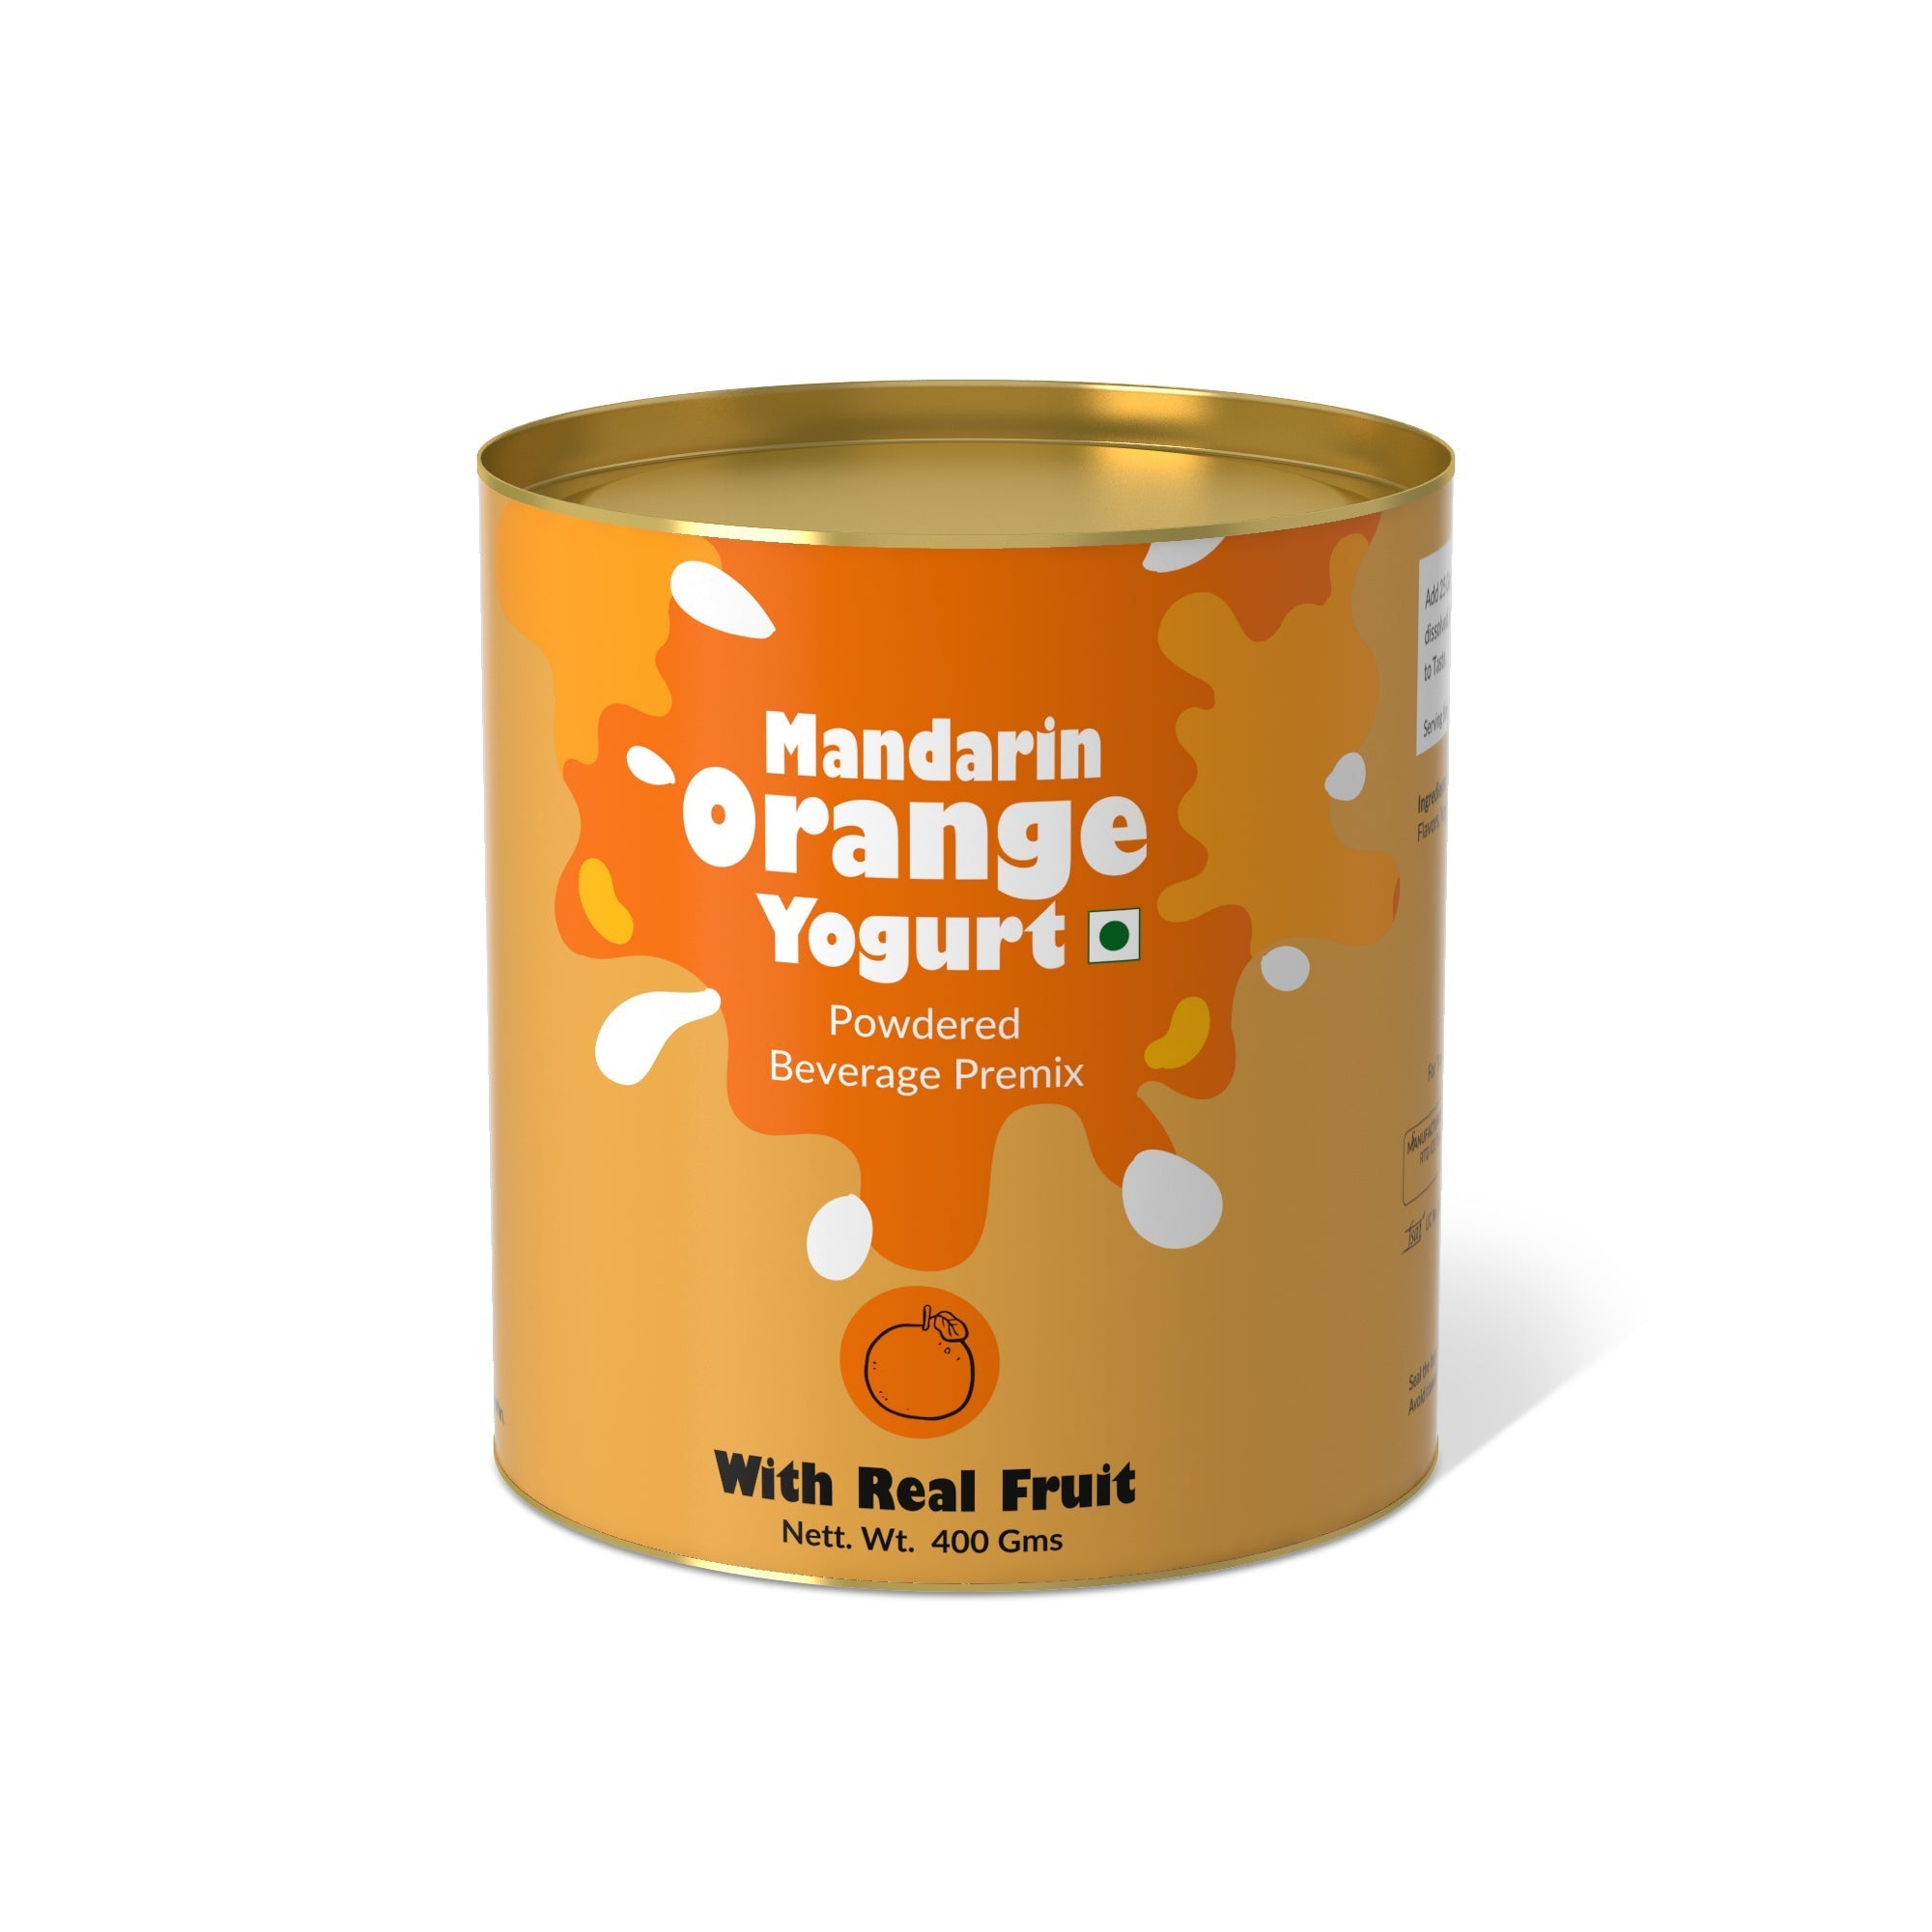 Mandarin Orange Yogurt Mix - 800 gms